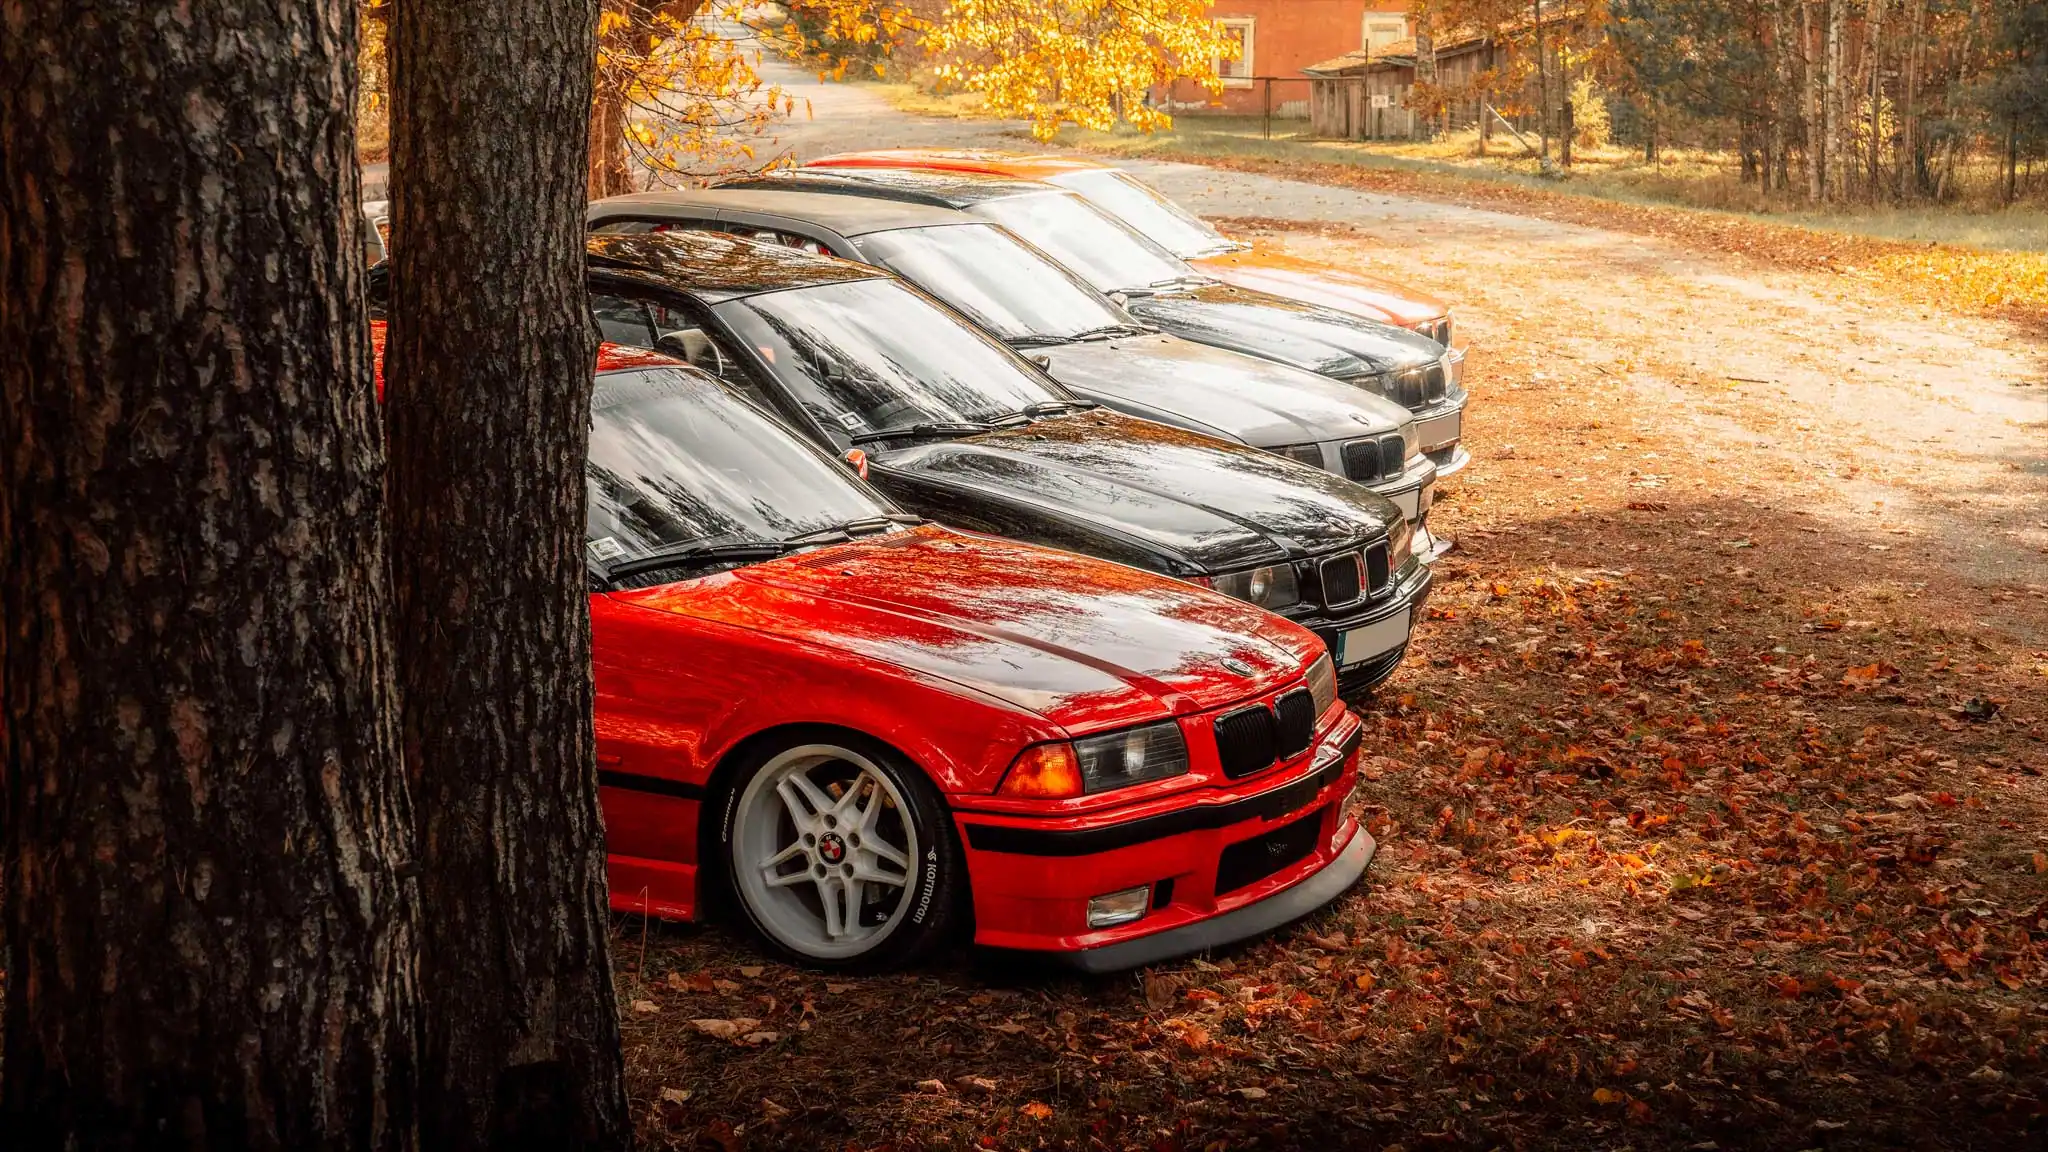 Several BMWs autumn sunshine